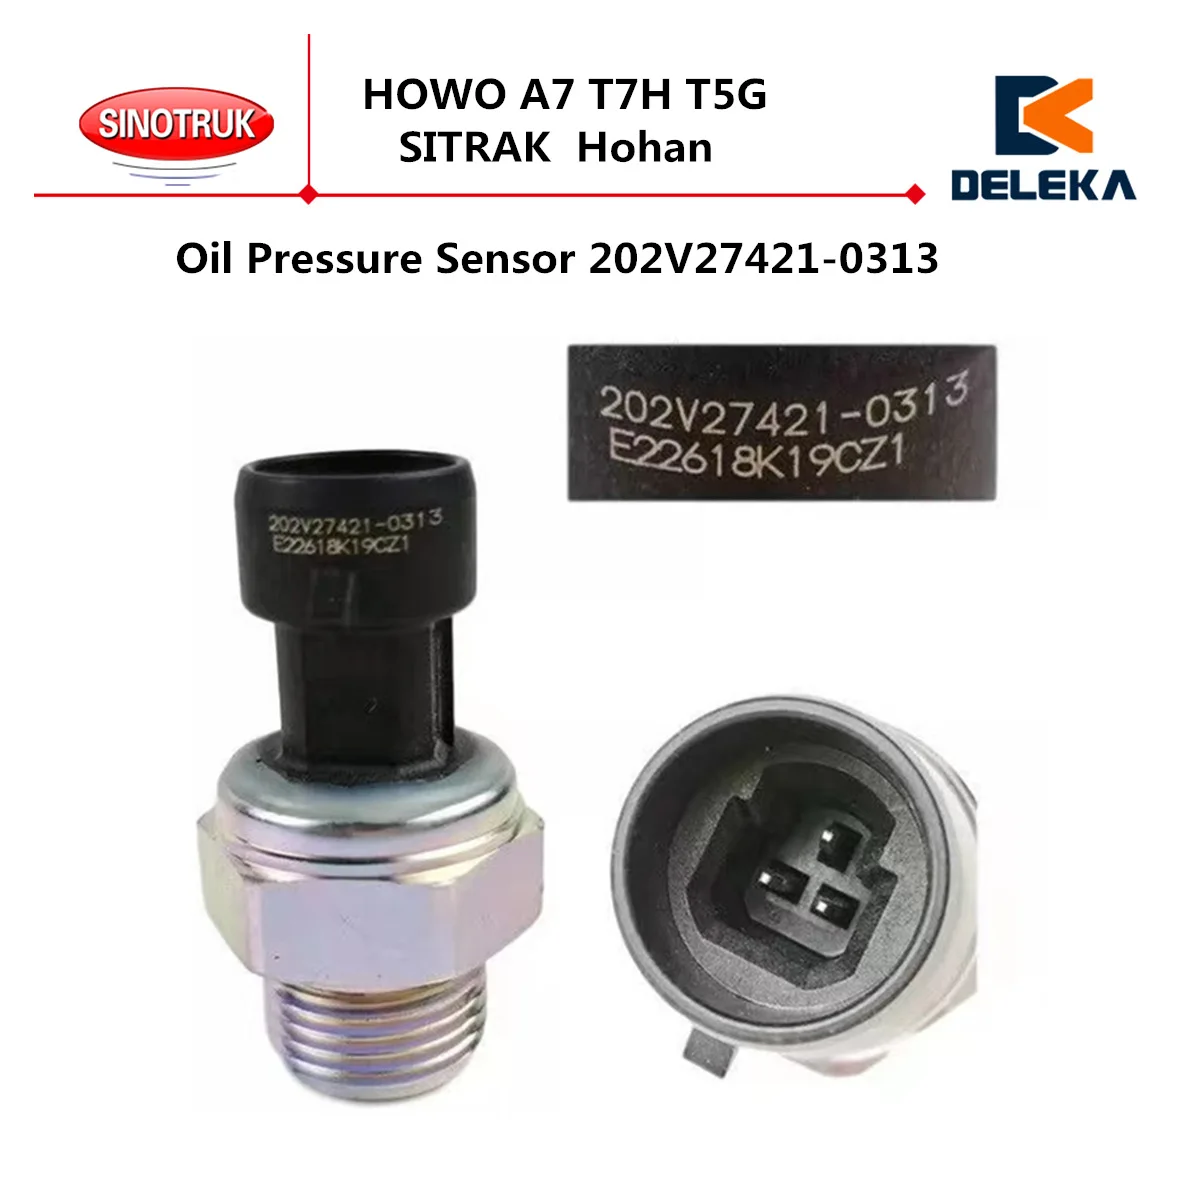 

Oil Pressure Sensor 202V27421-0313 Used For CNHTC SINOTRUK HOWO A7 T7H T5G SITRAK Hohan Man Engine Sensor Plug